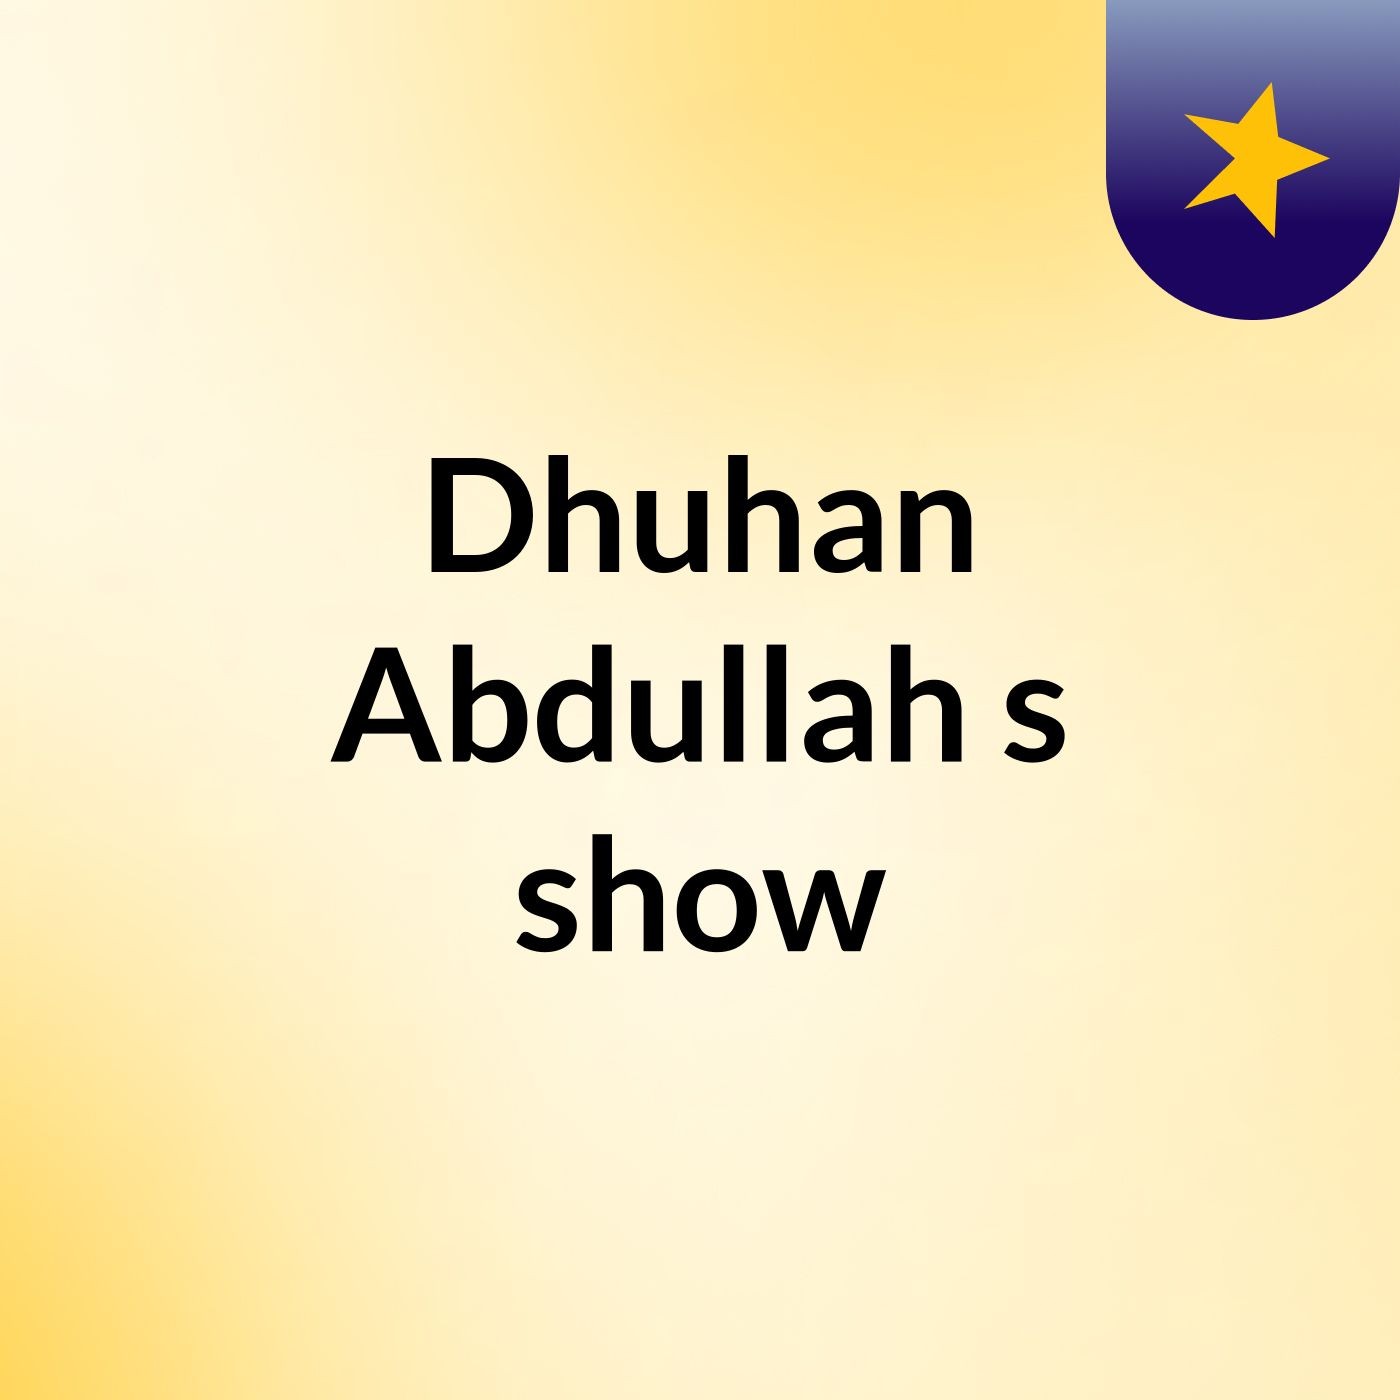 Dhuhan Abdullah's show